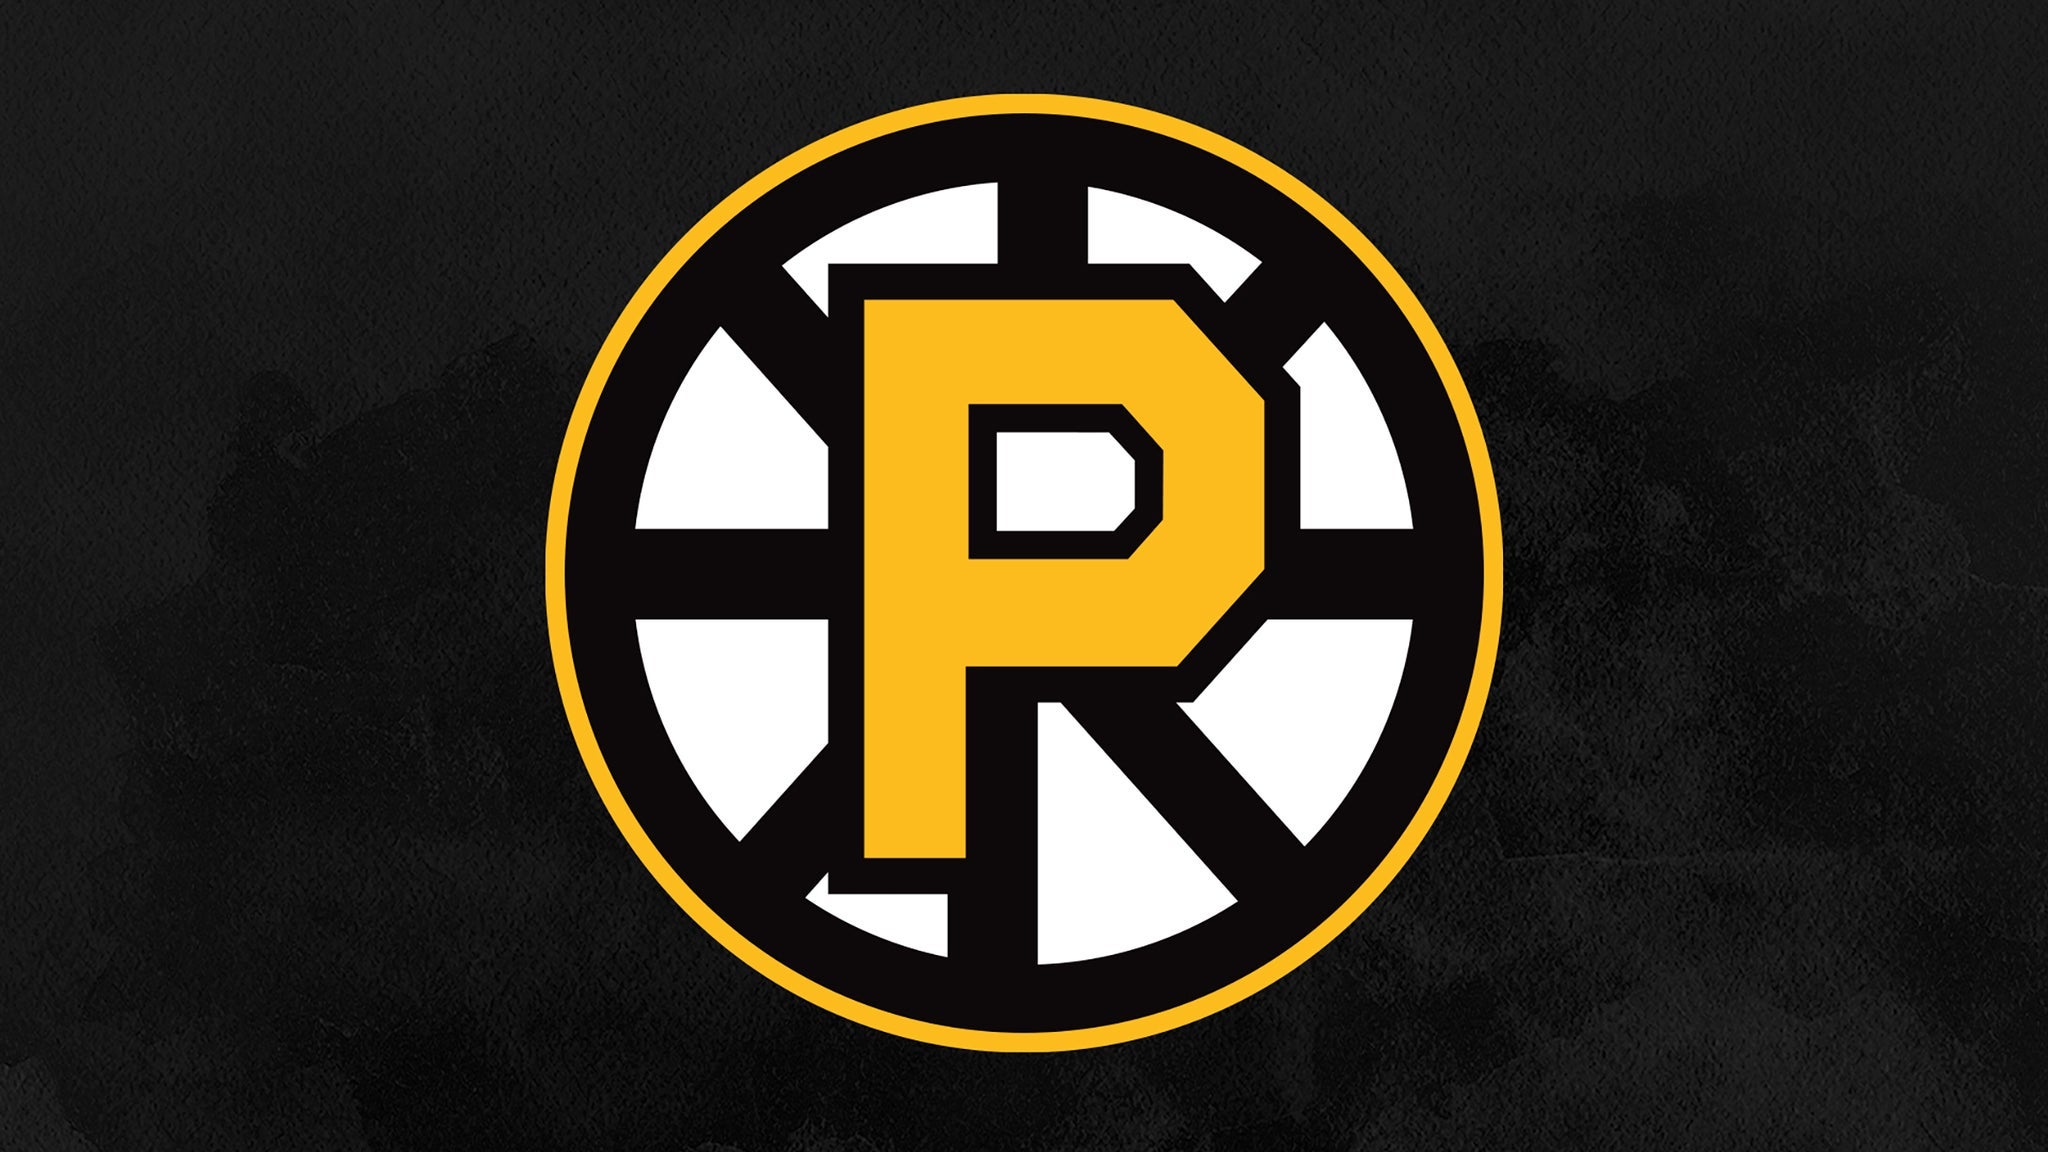 Providence Bruins vs. Wilkes Barre Scranton Penguins - Providence, RI 02903